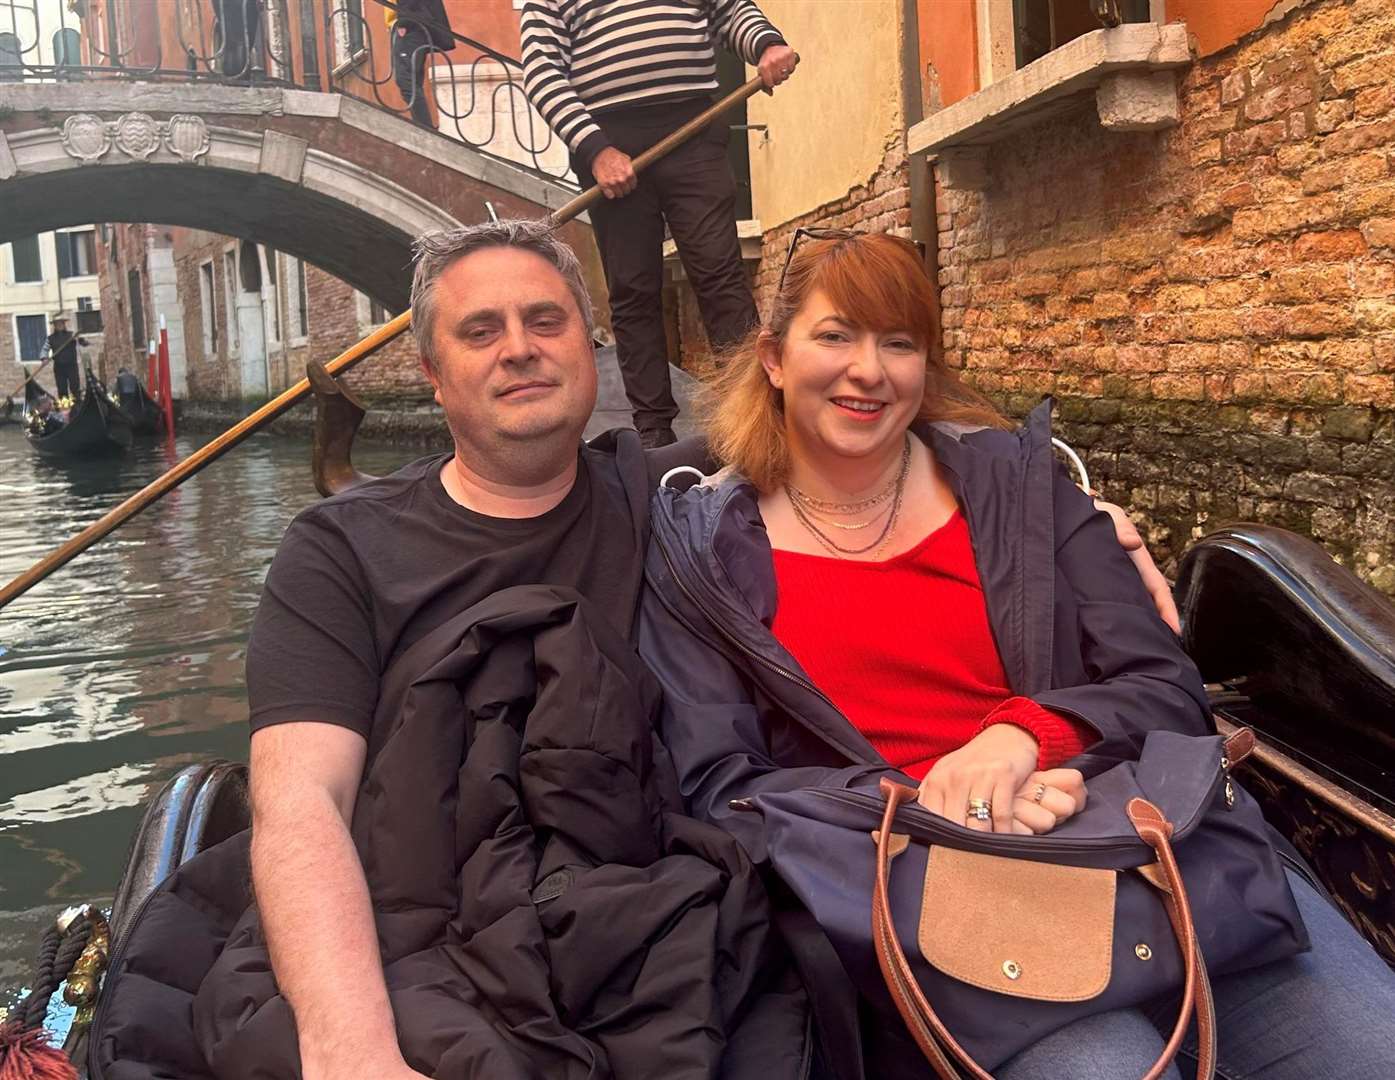 Matt Milne and wife Francesca enjoying a trip away together